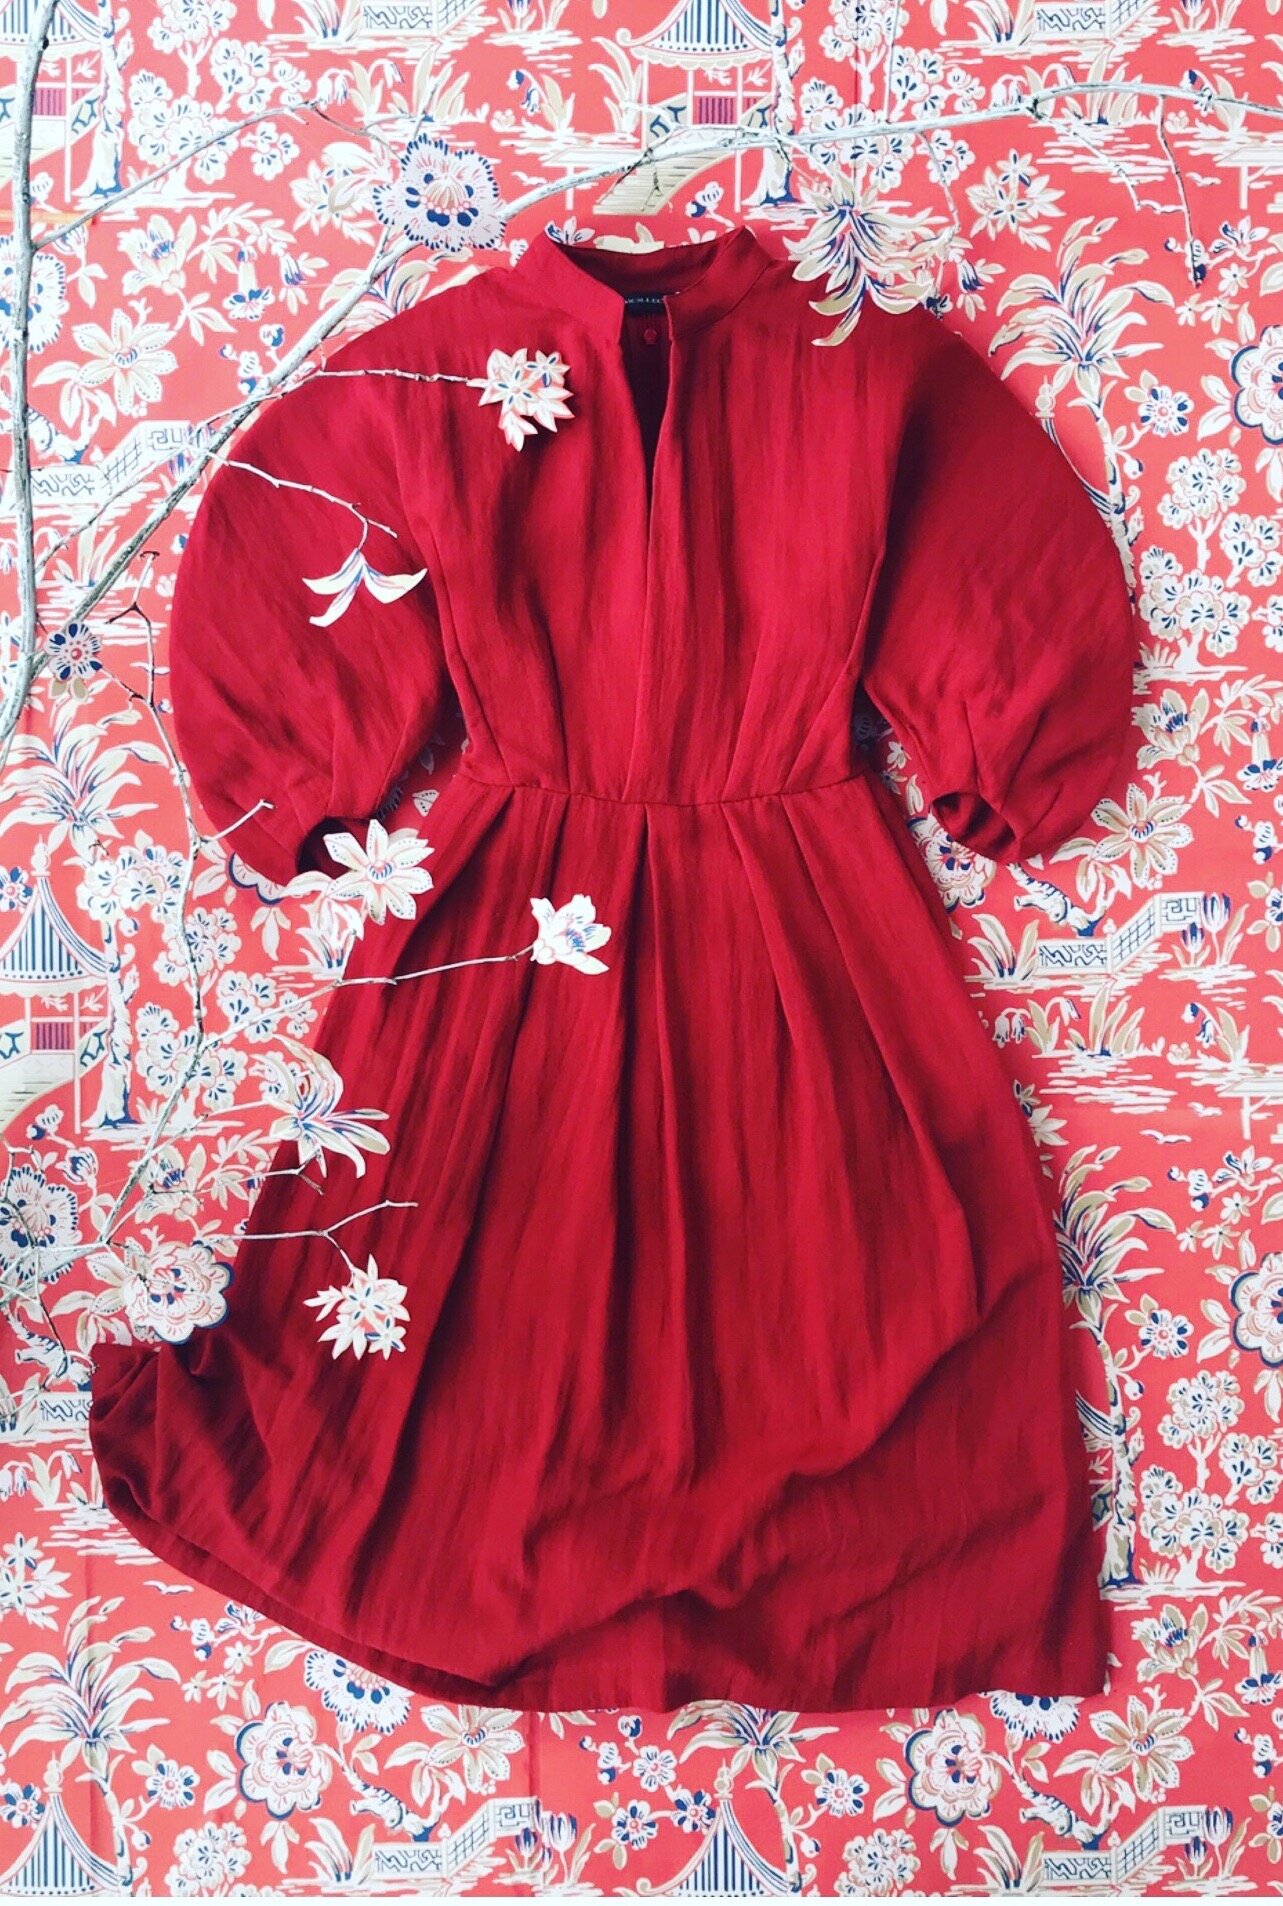 Red Dress - Flat Lay Styling